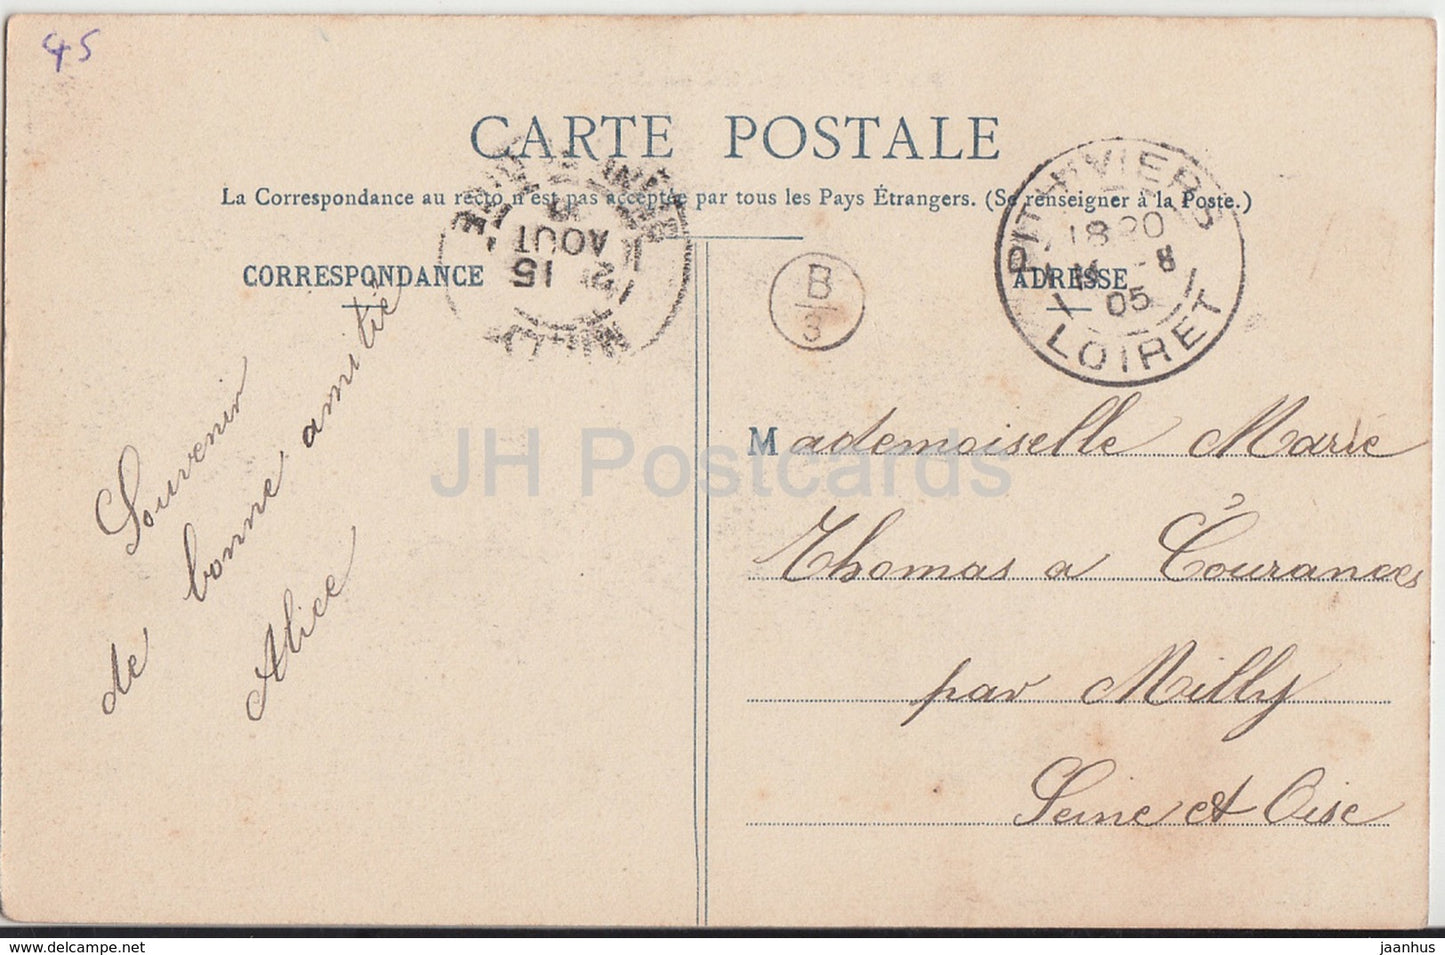 Malesherbes - Chateau de Rouville - Schloss - 1905 - alte Postkarte - Frankreich - gebraucht